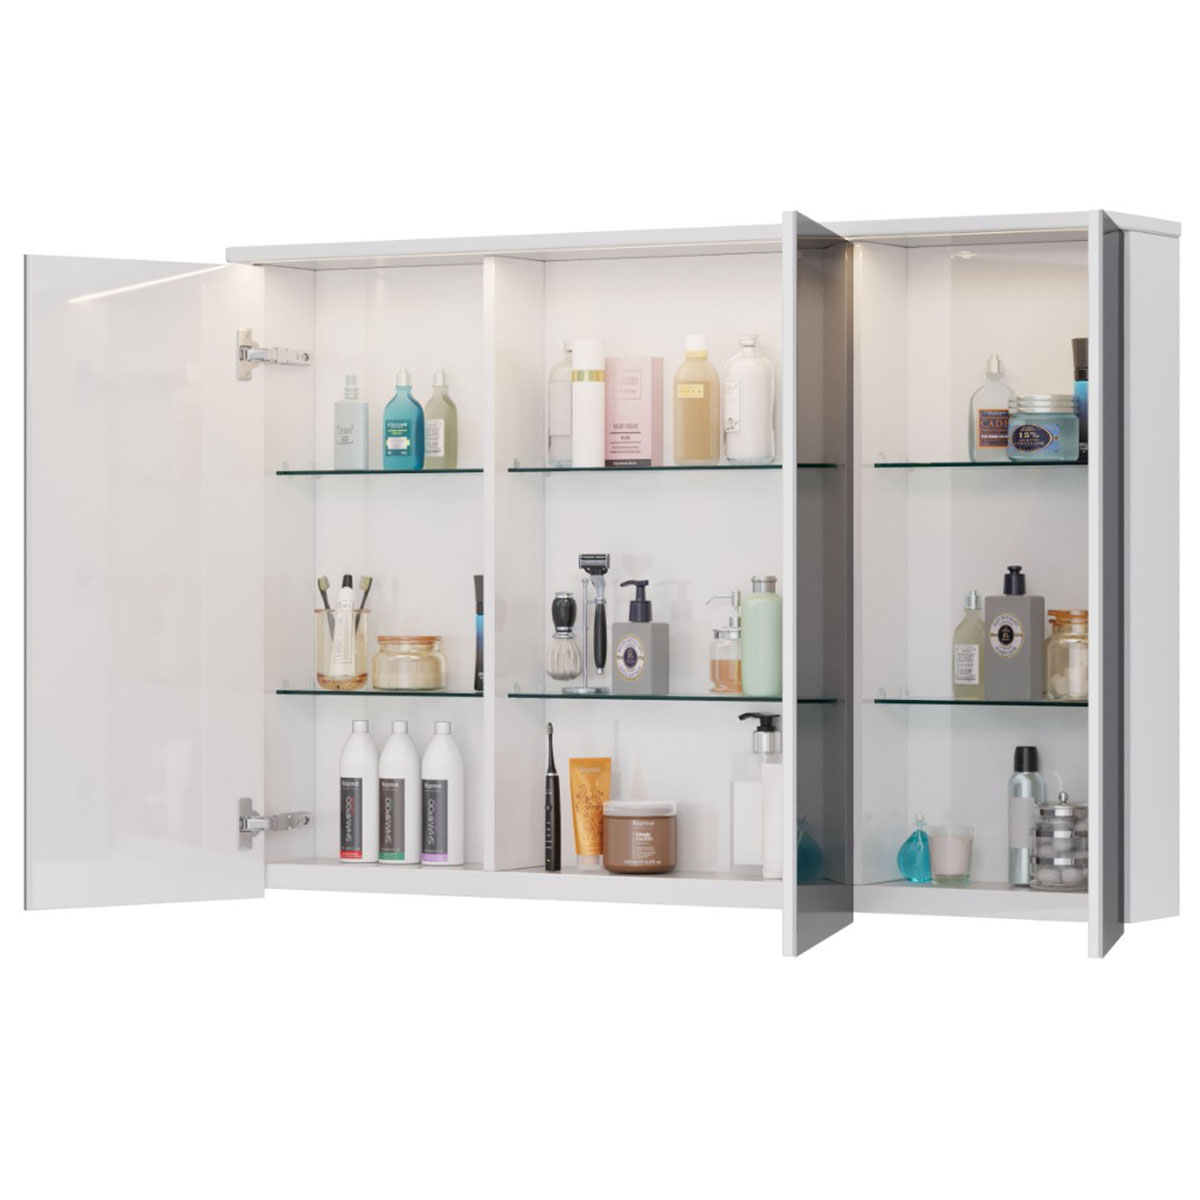 Шкаф зеркальный Lemark ZENON 120х80 см 3-х дверный, с козырьком-подсветкой, с розеткой, цвет корпуса: Белый глянец